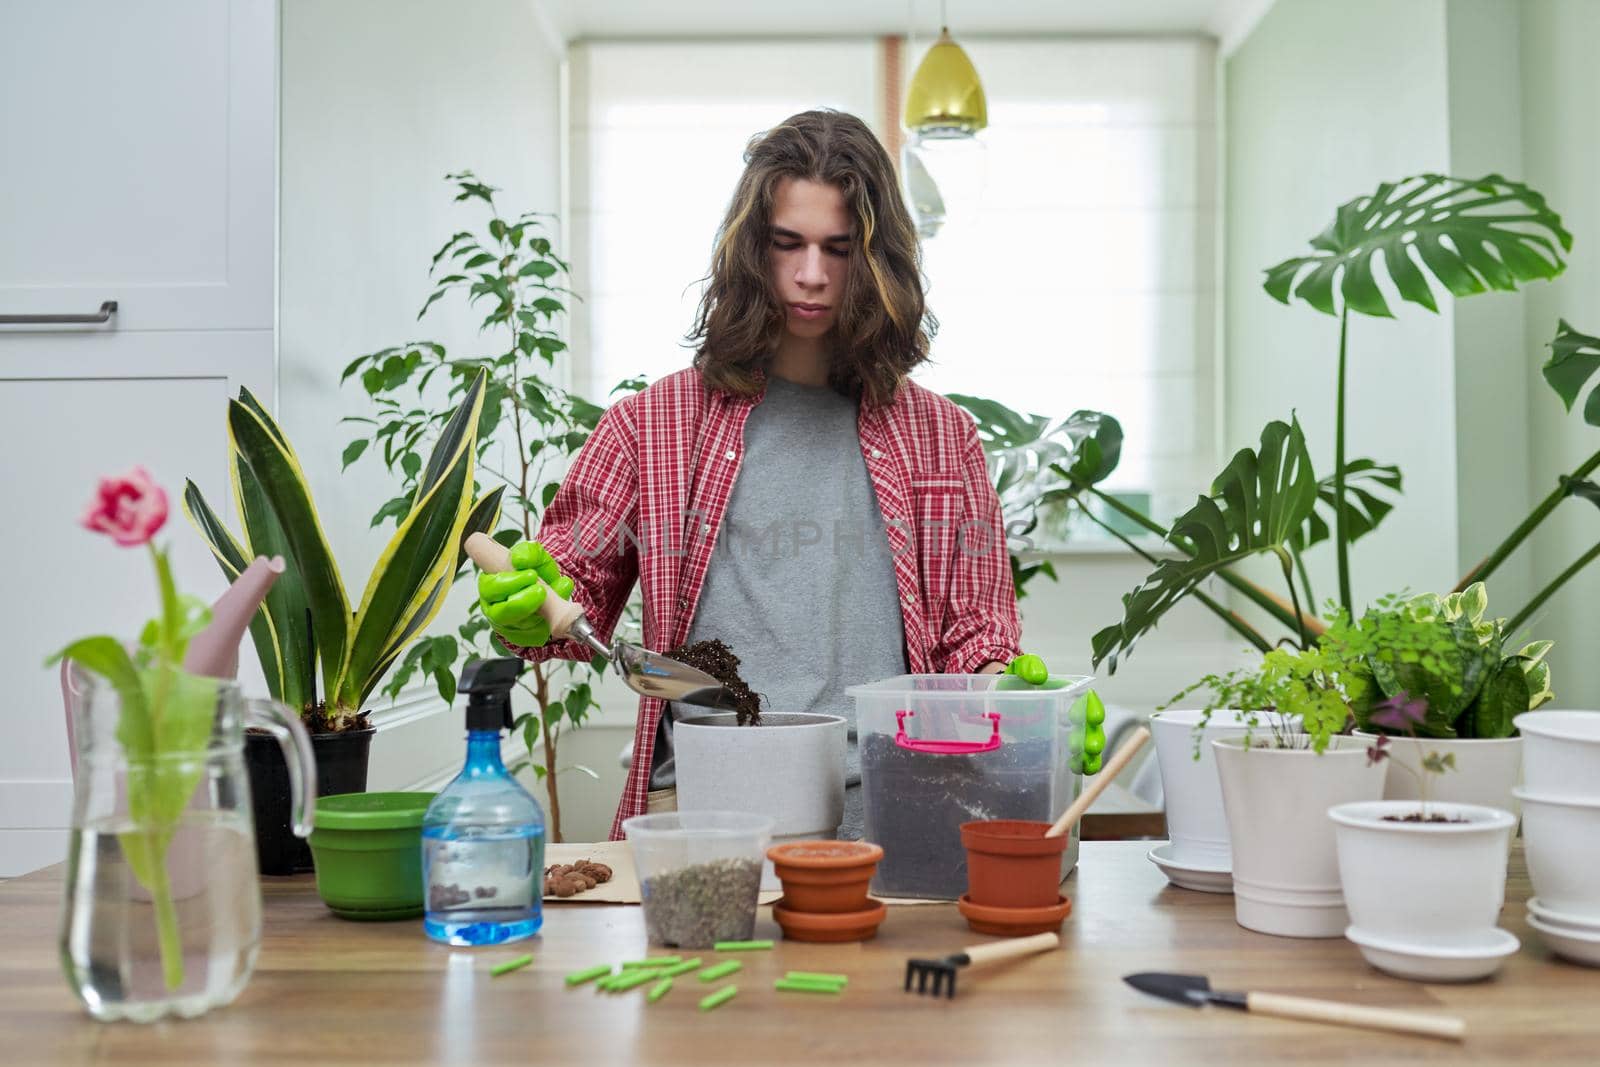 Guy teenager caring replanting indoor plants in pots by VH-studio